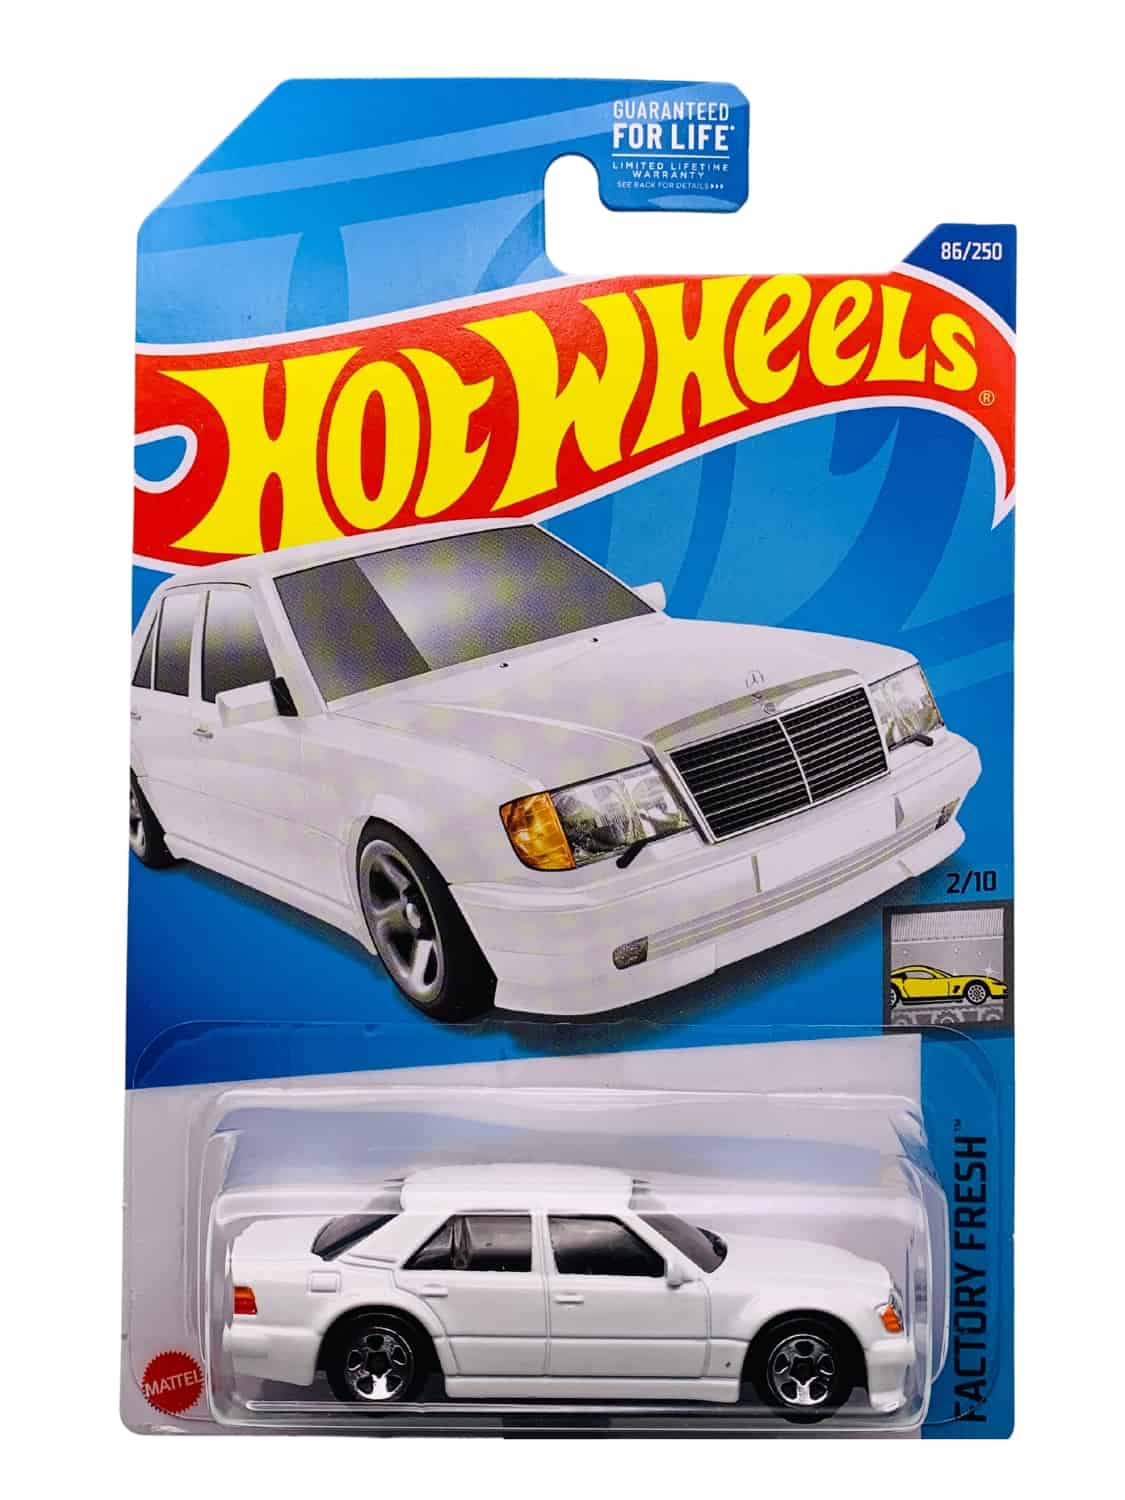 HCY42 Mercedes-Benz 500e white hot wheels